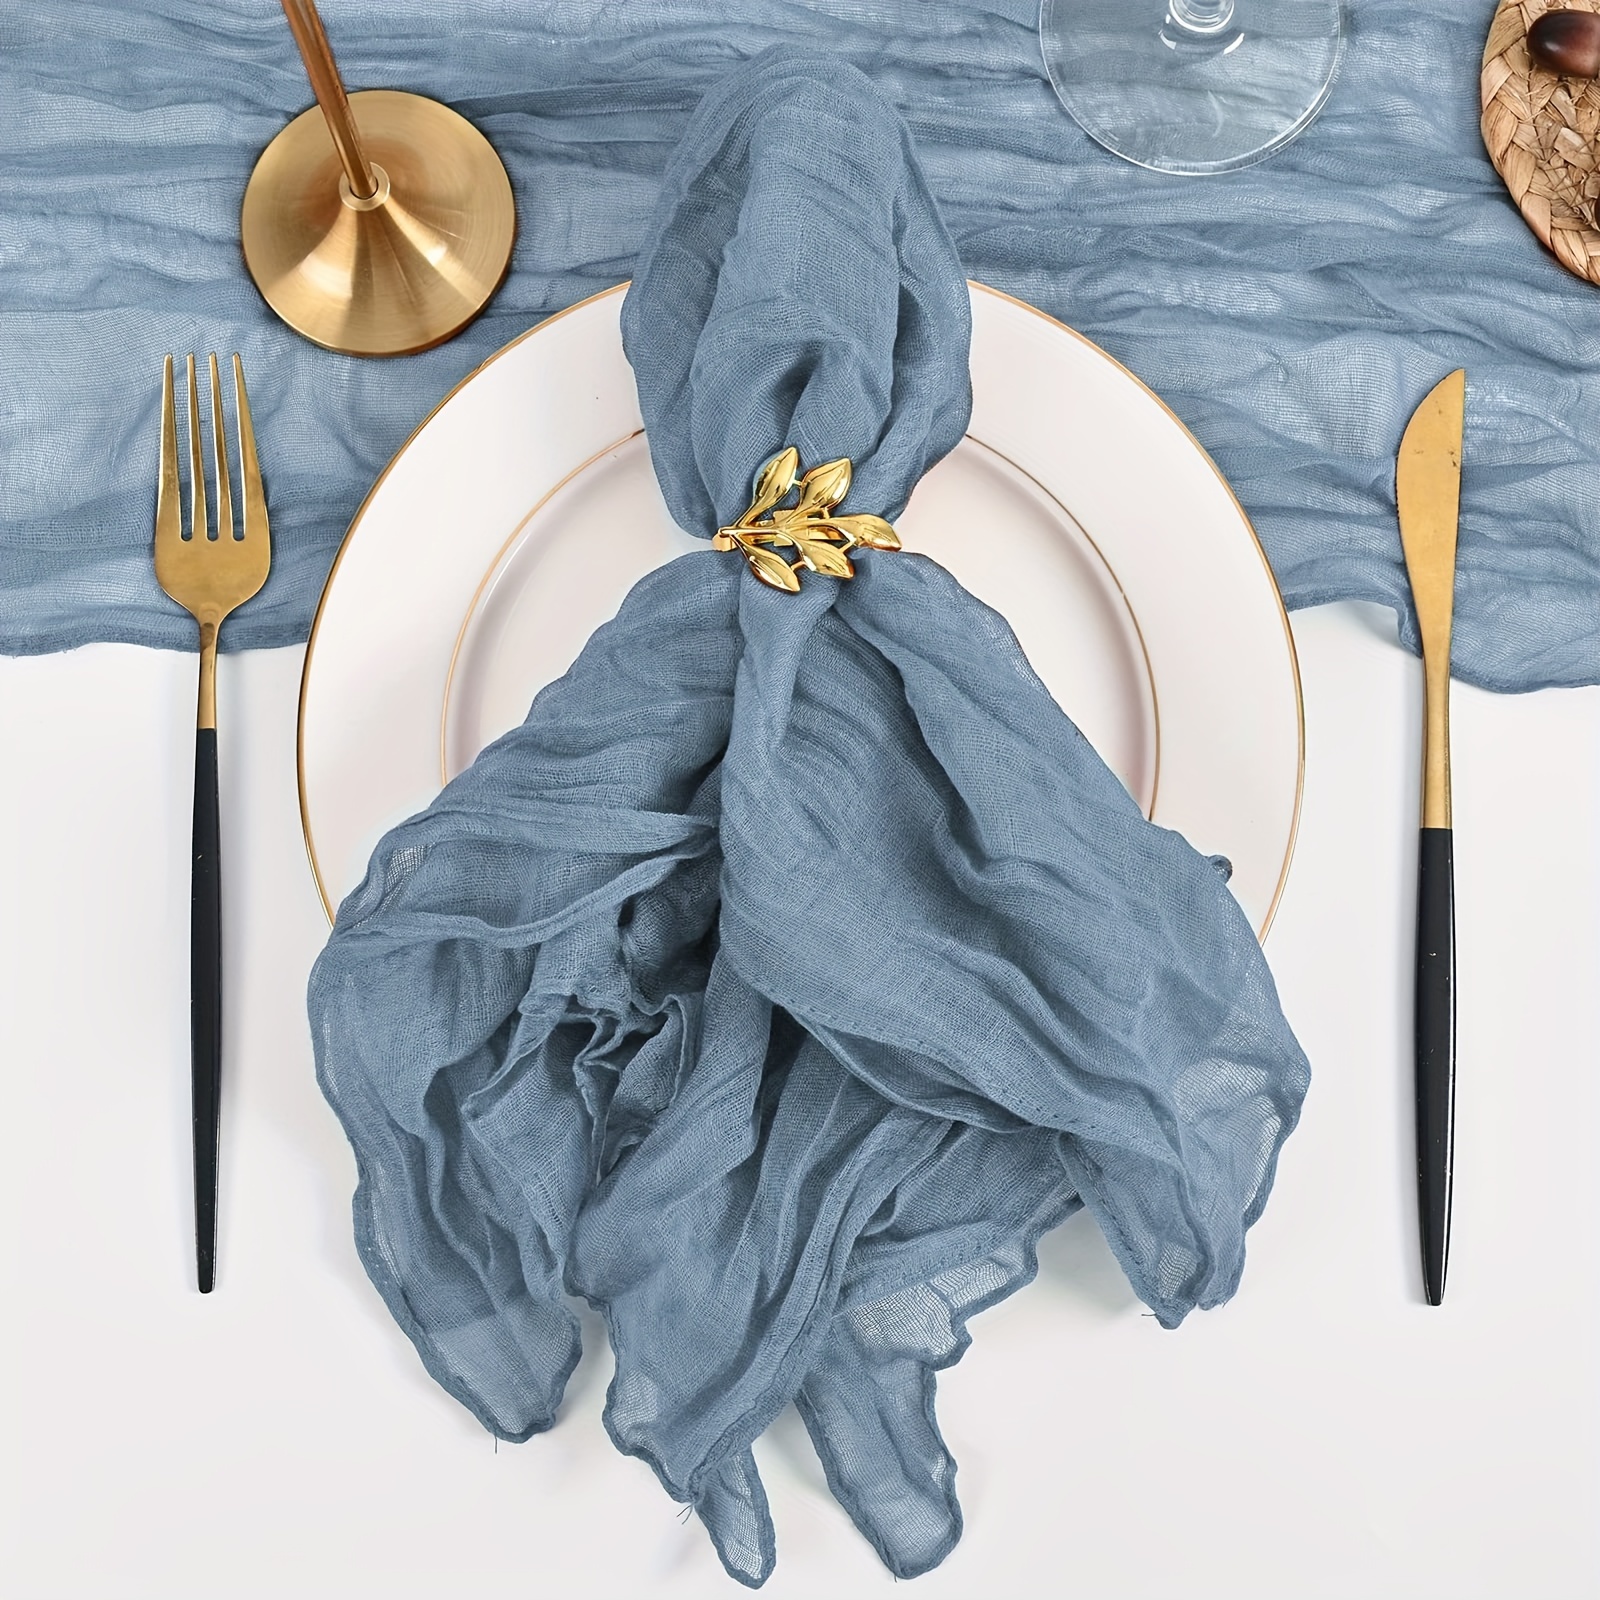 

6pcs, Square Napkins, Wrinkle-resistant Misty Blue Gauze Napkins, Polyester Table Linens For Dinner, Wedding, Party, Thanksgiving Home Decor